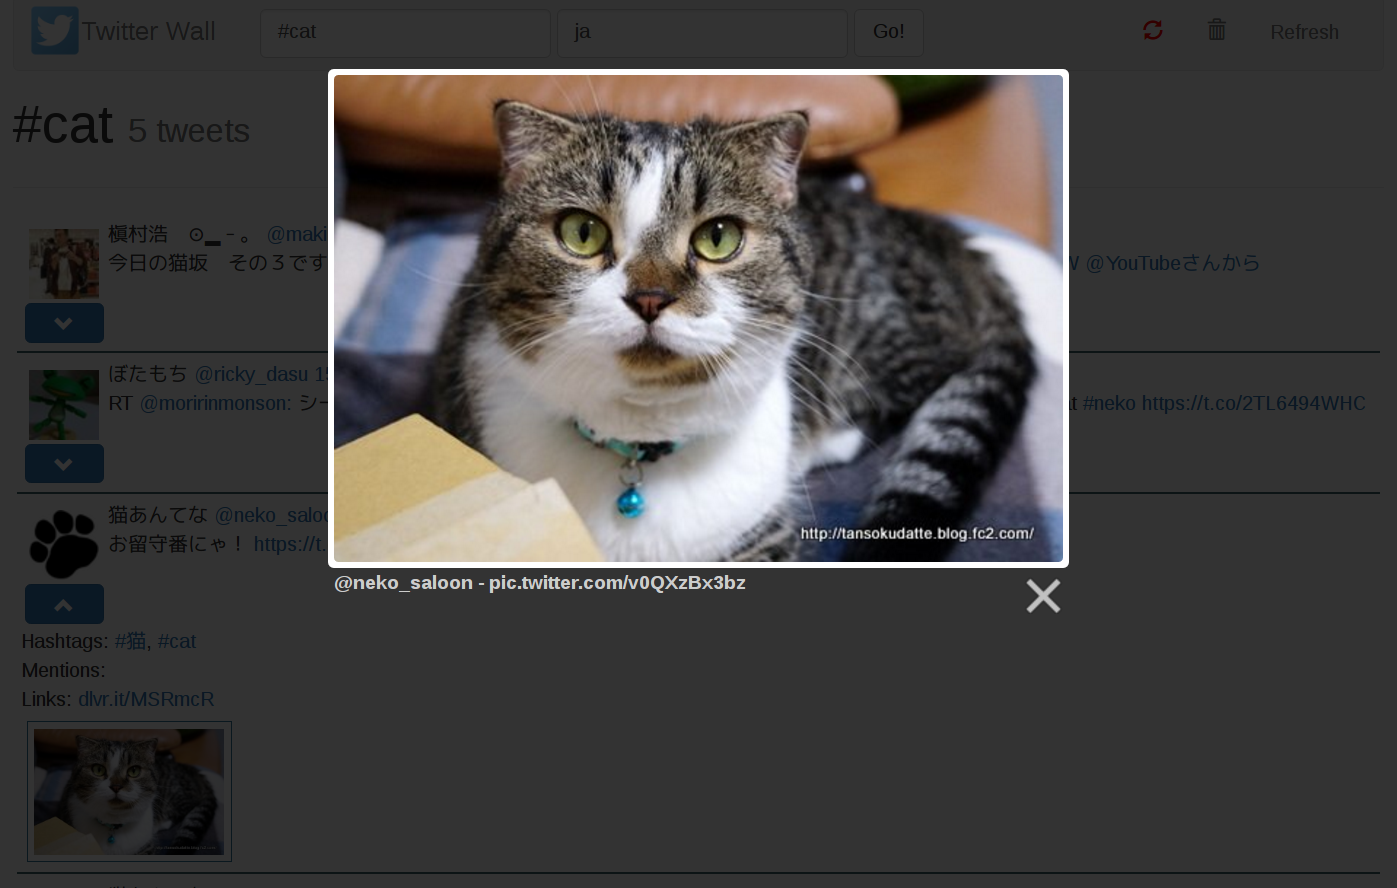 Enlarged photo of cat via Lightbox